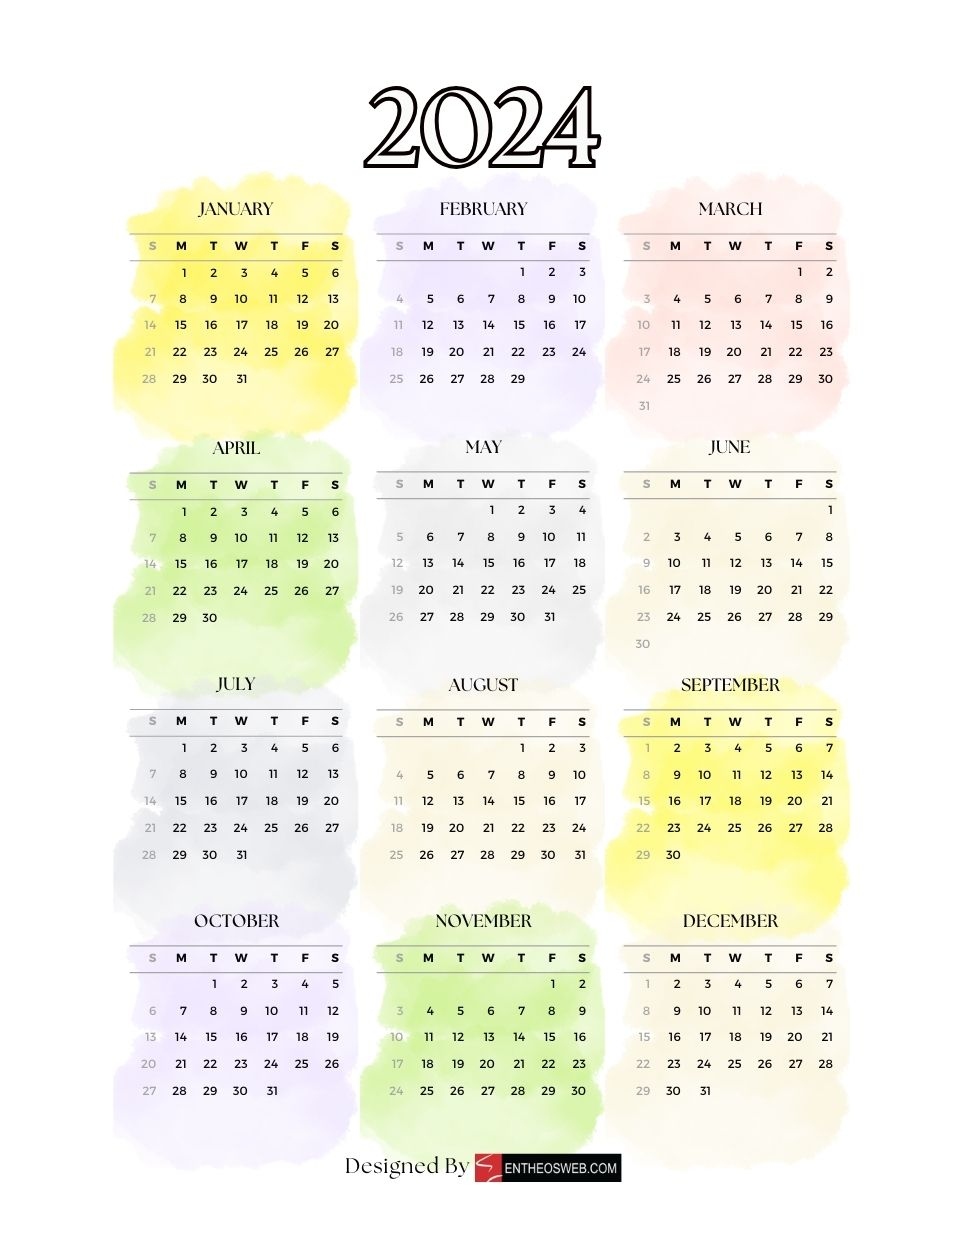 2024 Pdf Calendars – Free Printable Pdf Downloads | Entheosweb within Free Printable Calendar 2024 Watercolor